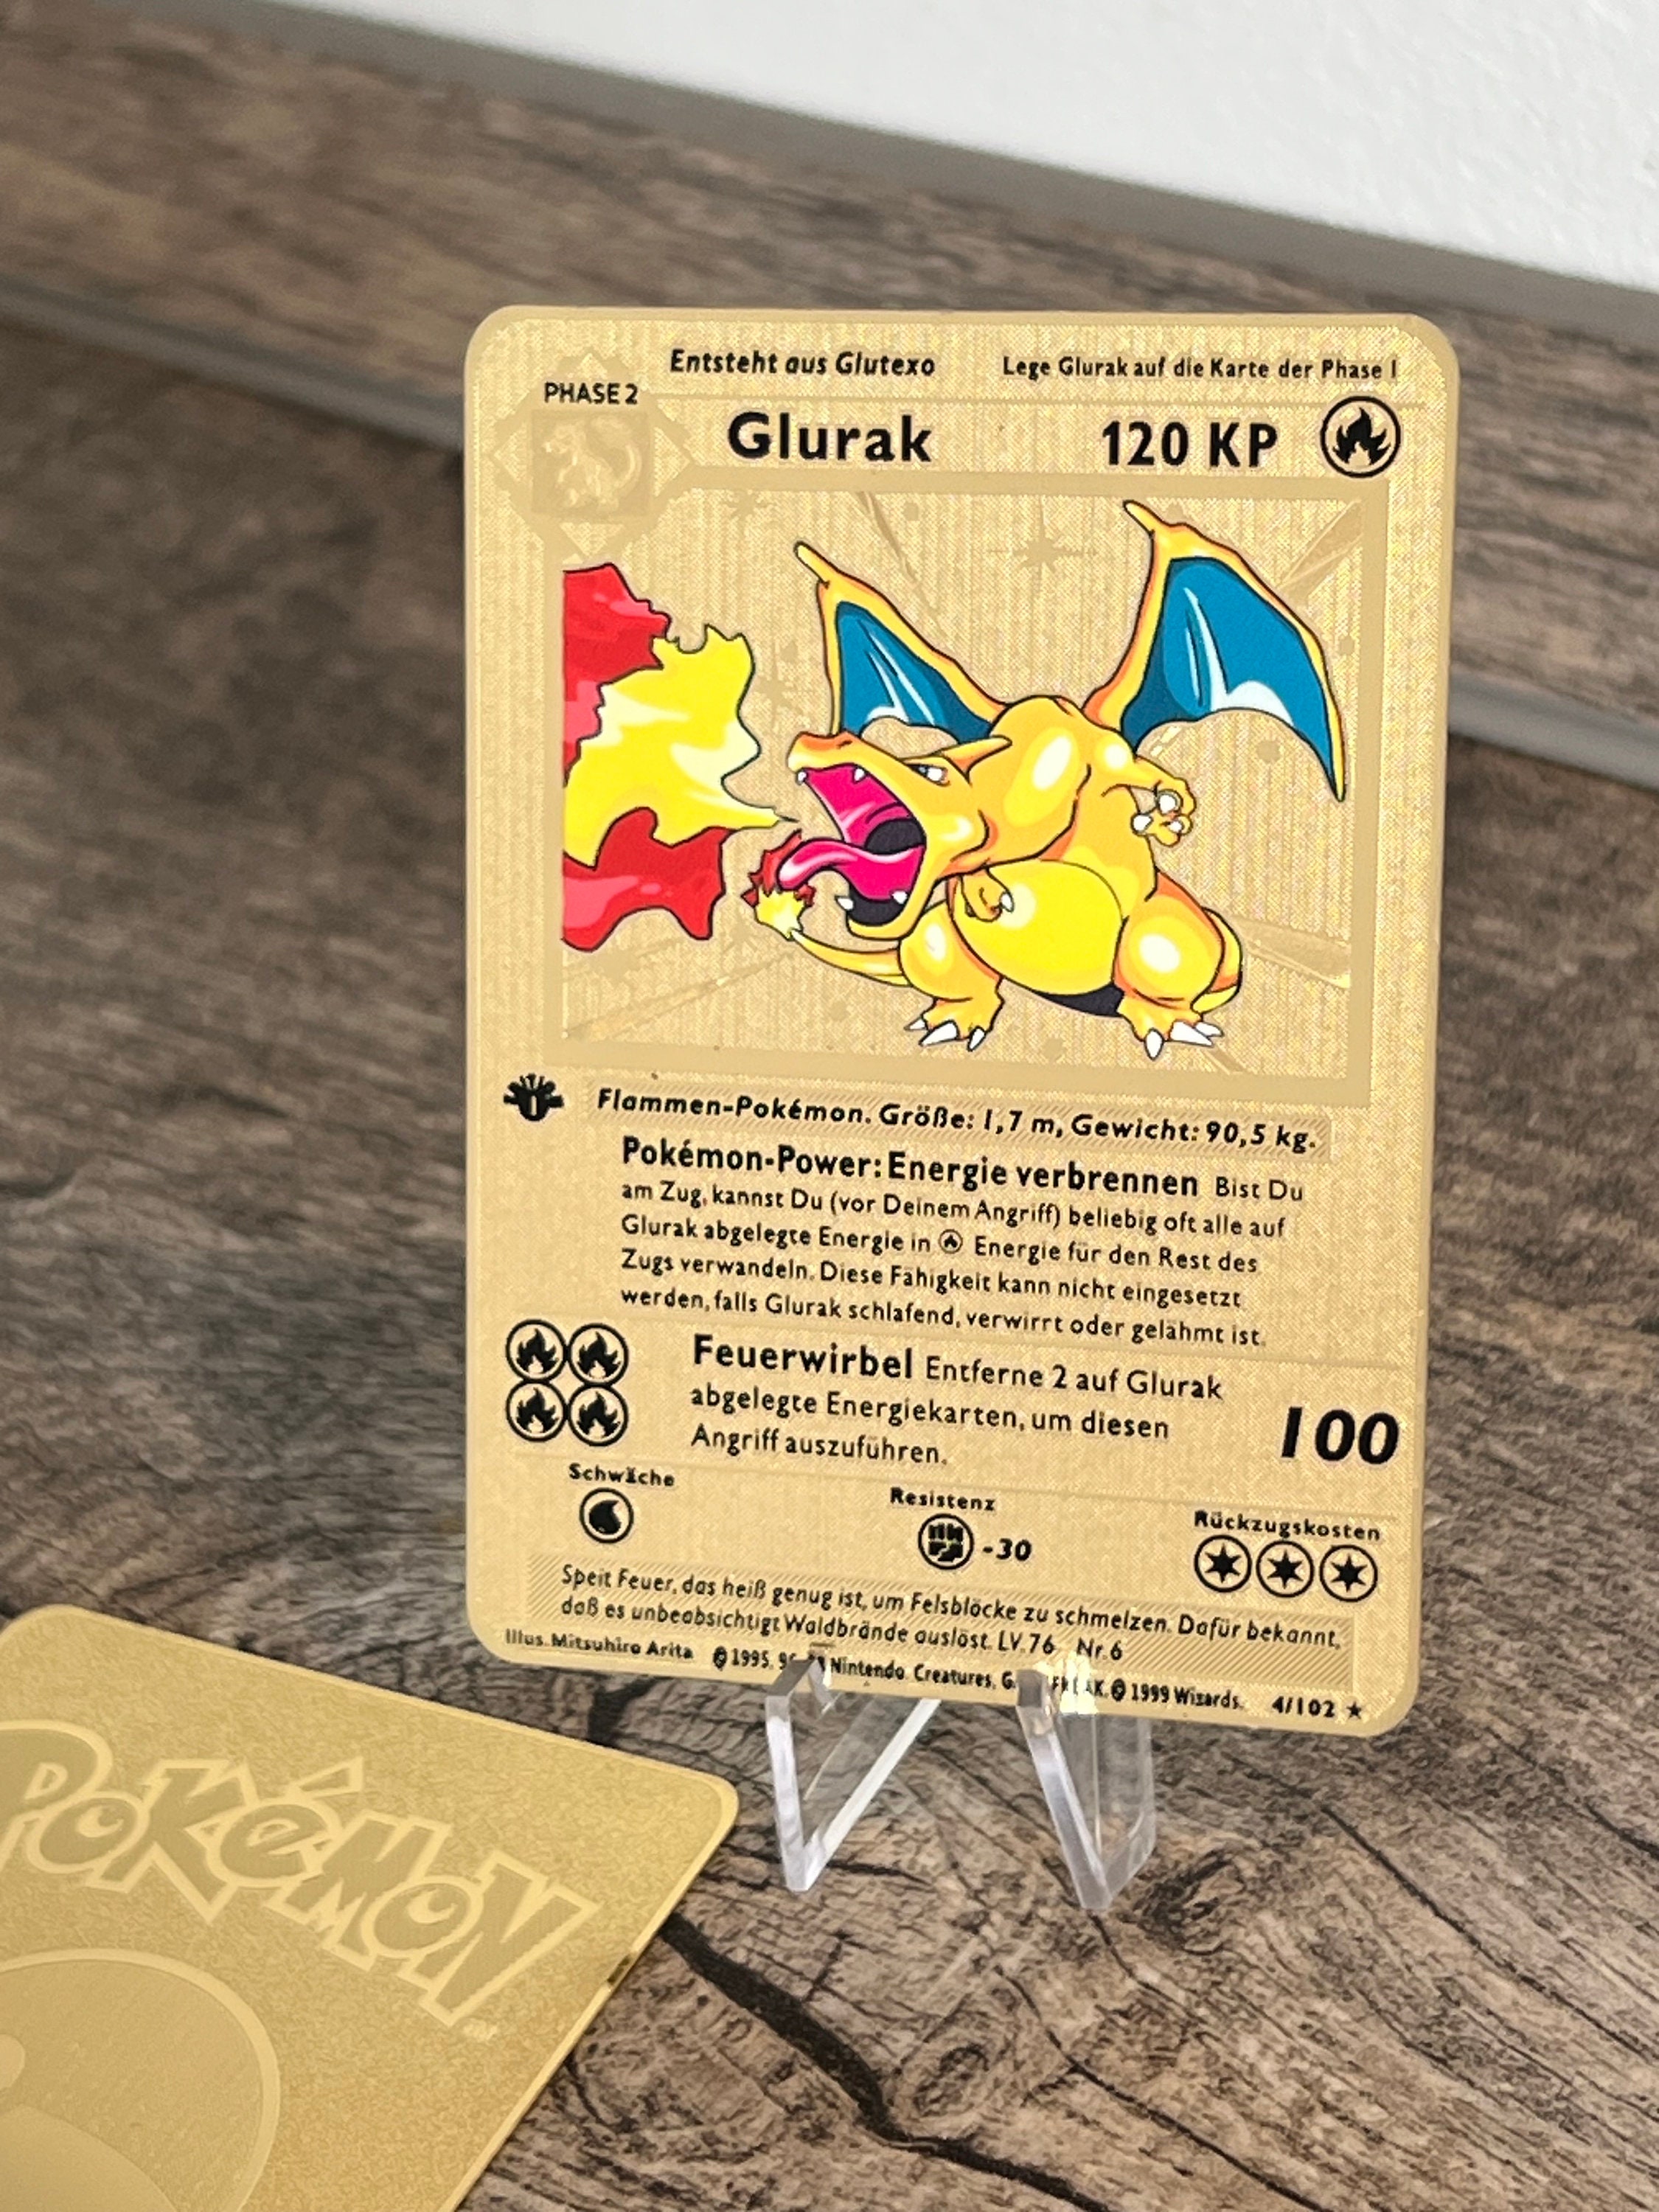 8.8*6.3cm Pokemon Pikachu Illustrator Cards Game Pokemon Game Collection  Diy Flash Cards Gift Children Toys